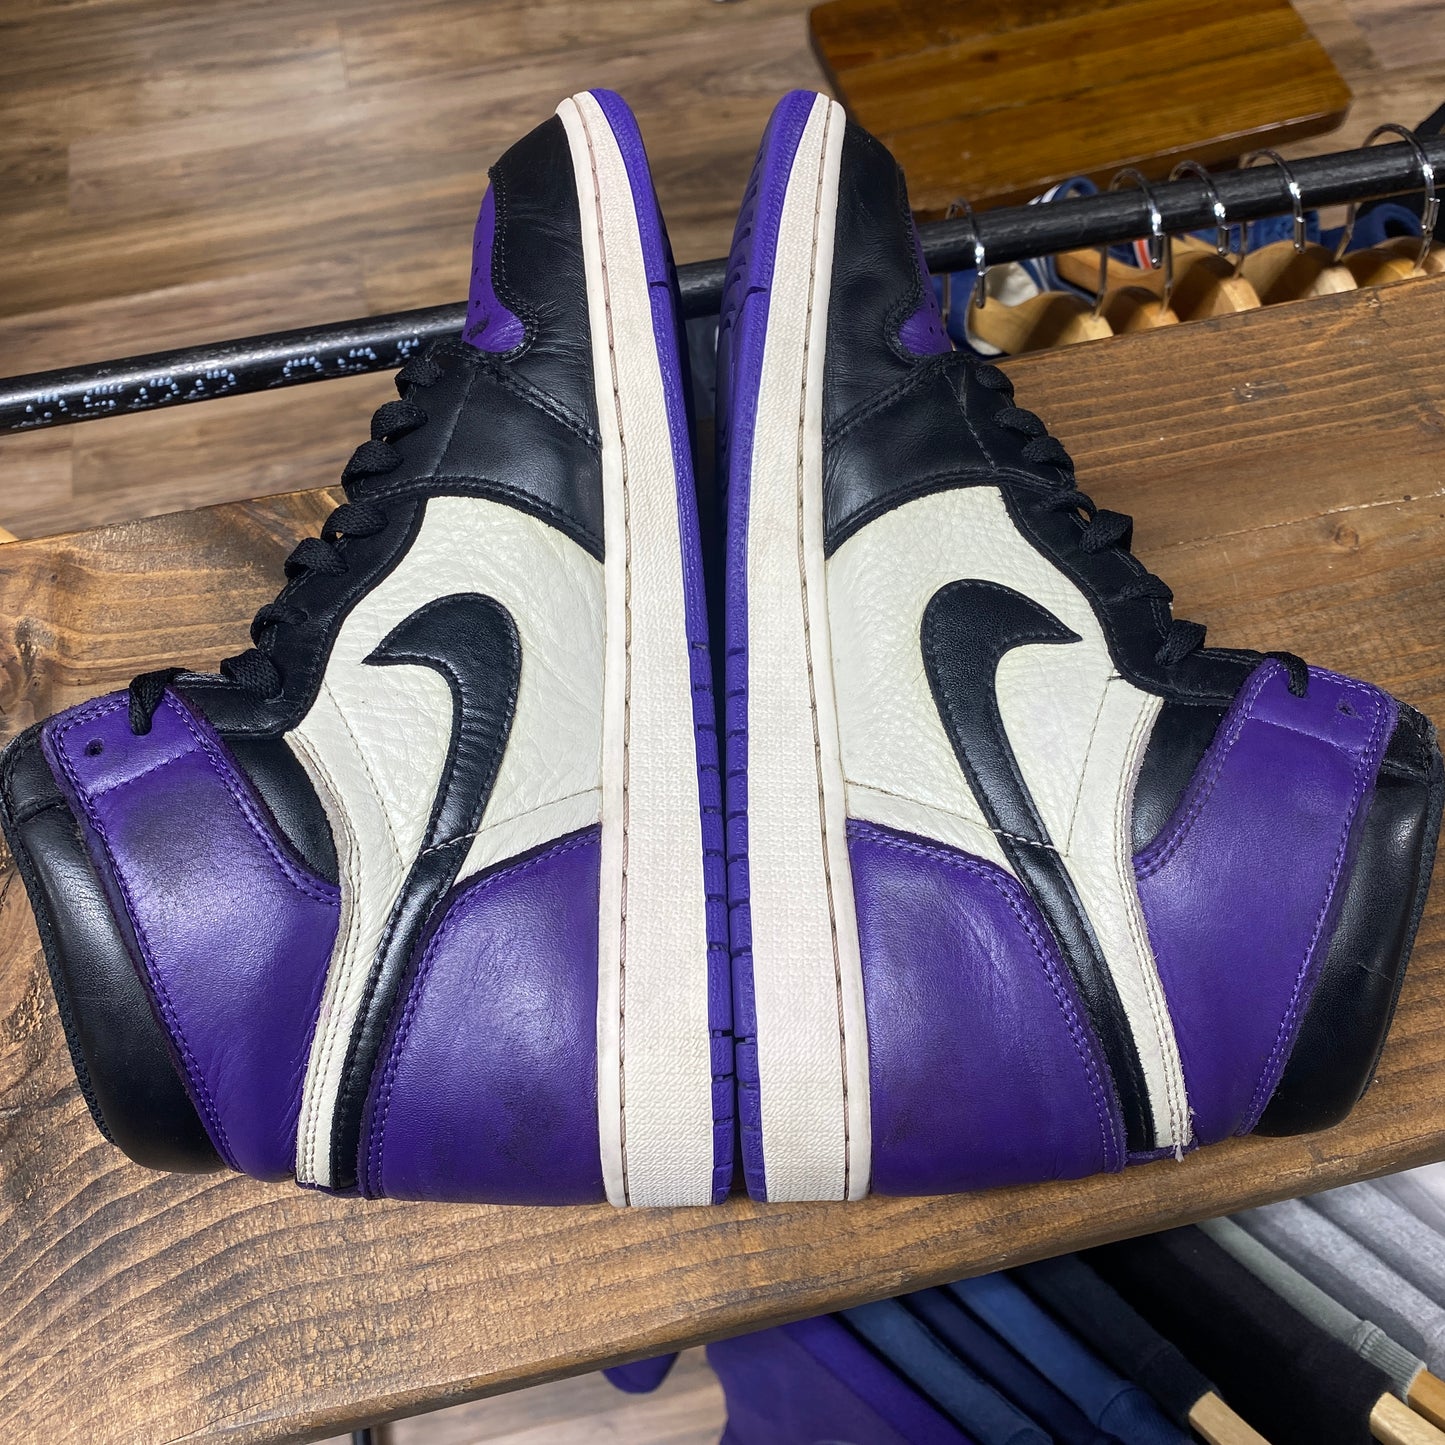 Jordan 1 'Court Purple 1.0' Size 11